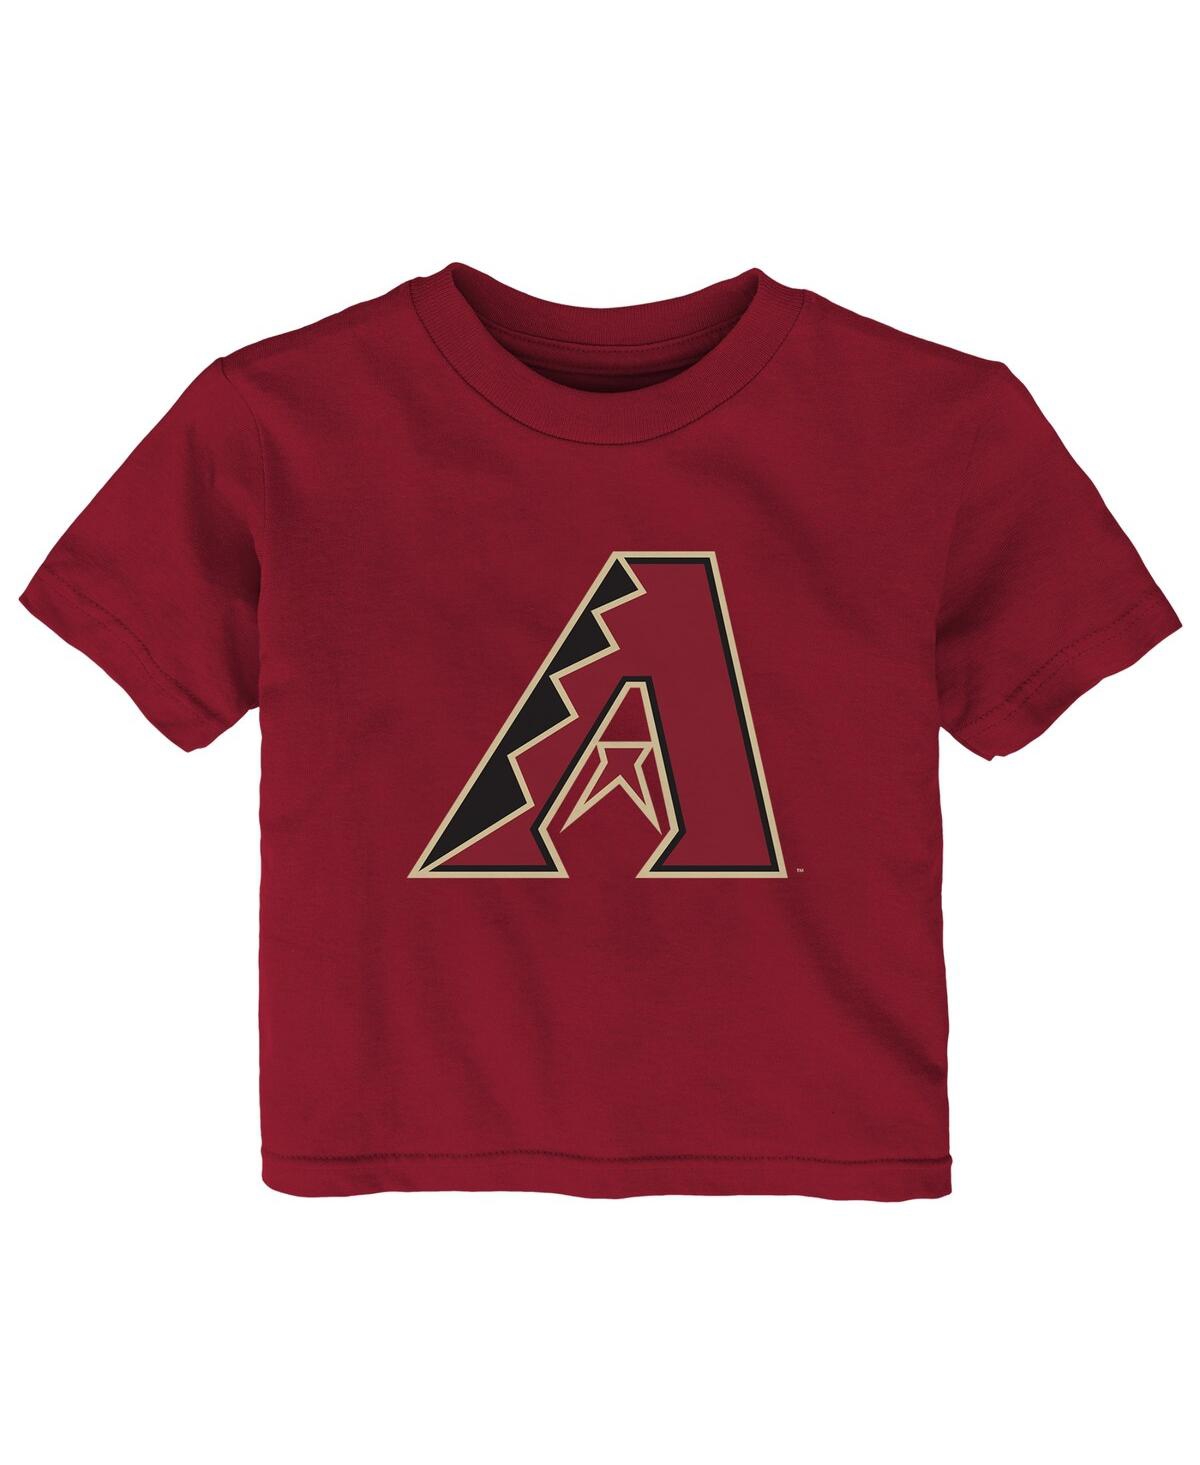 Outerstuff Babies' Infant Boys And Girls Red Arizona Diamondbacks Team Crew Primary Logo T-shirt